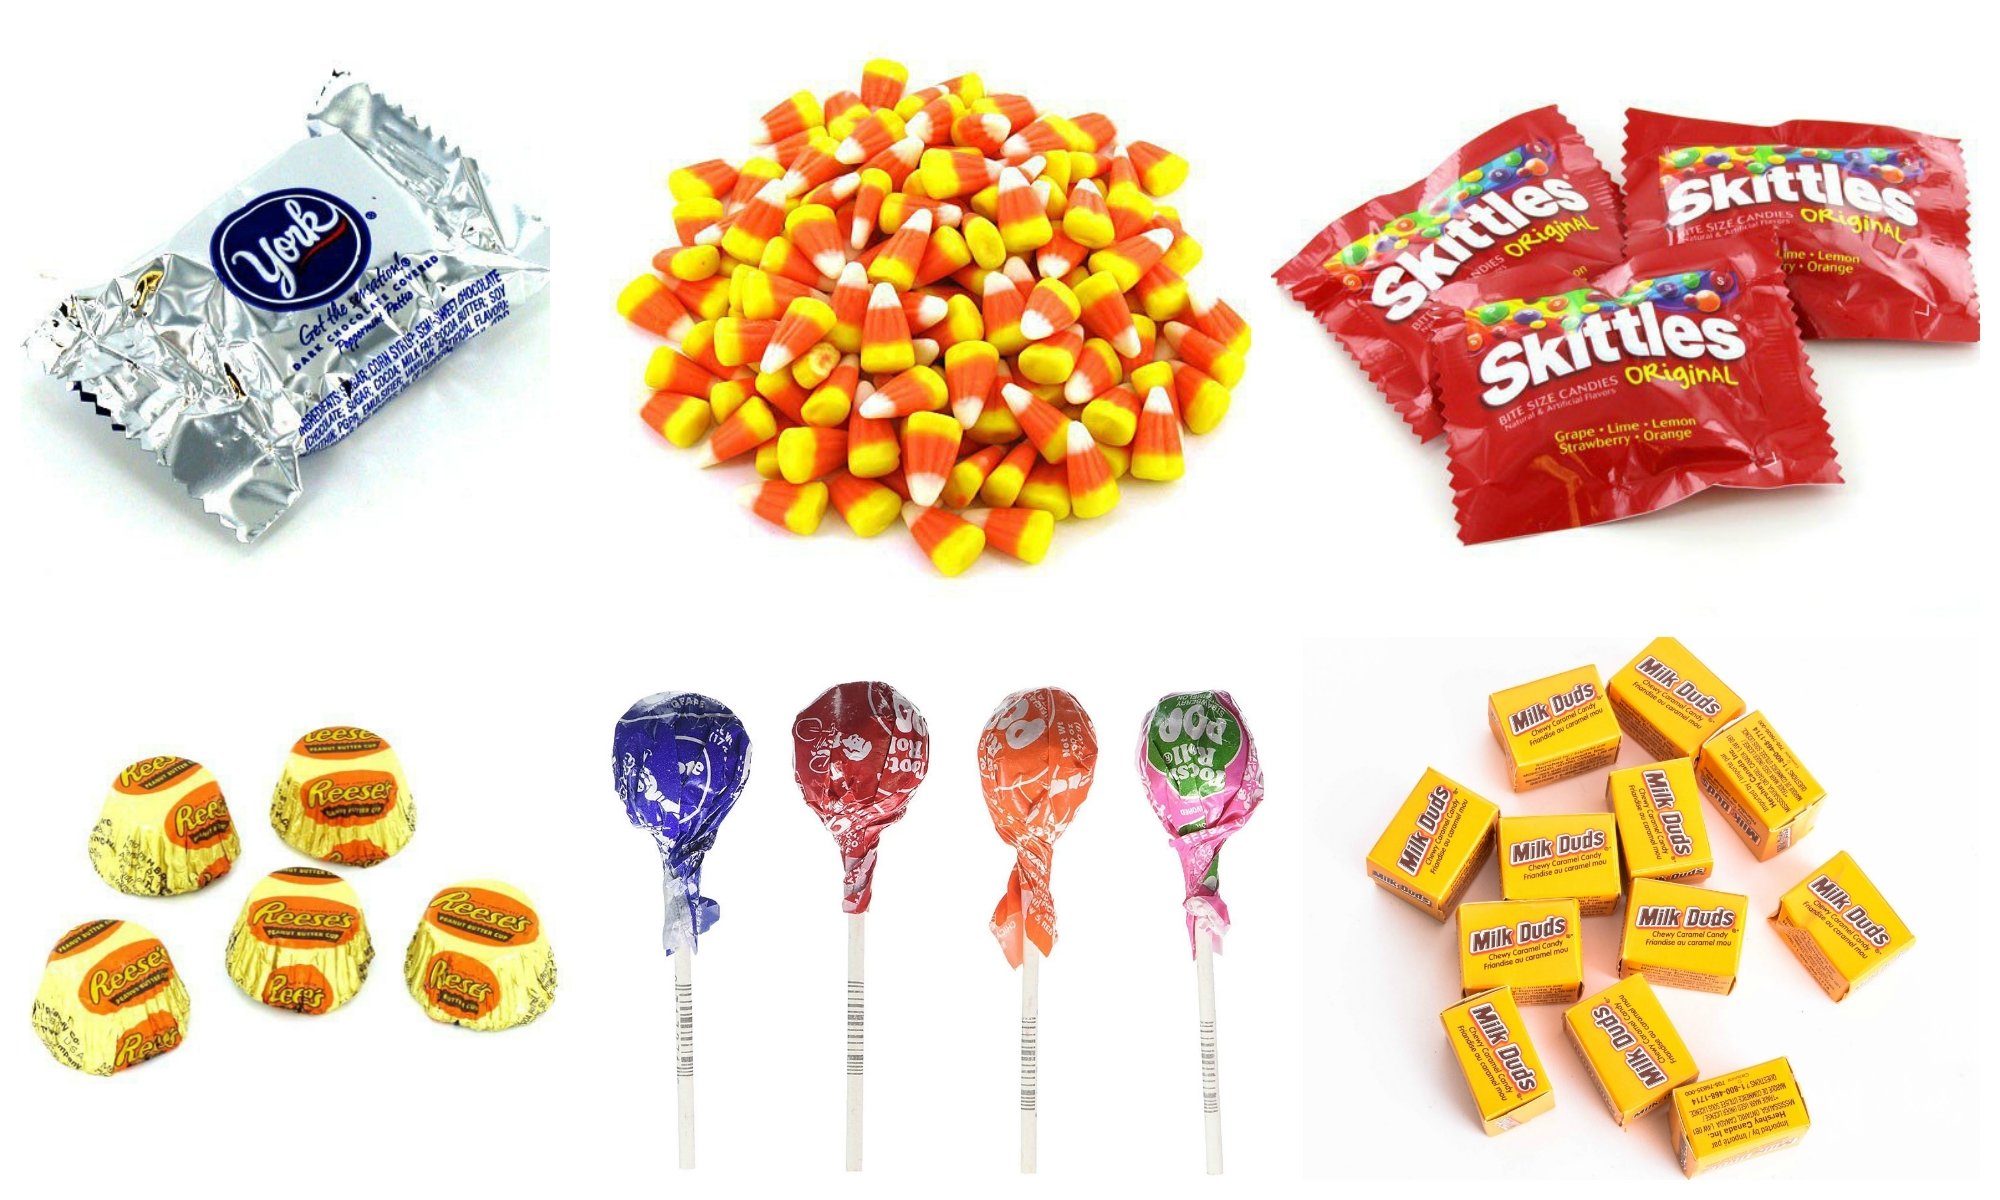 Photos of 100 Calories of Halloween Candy